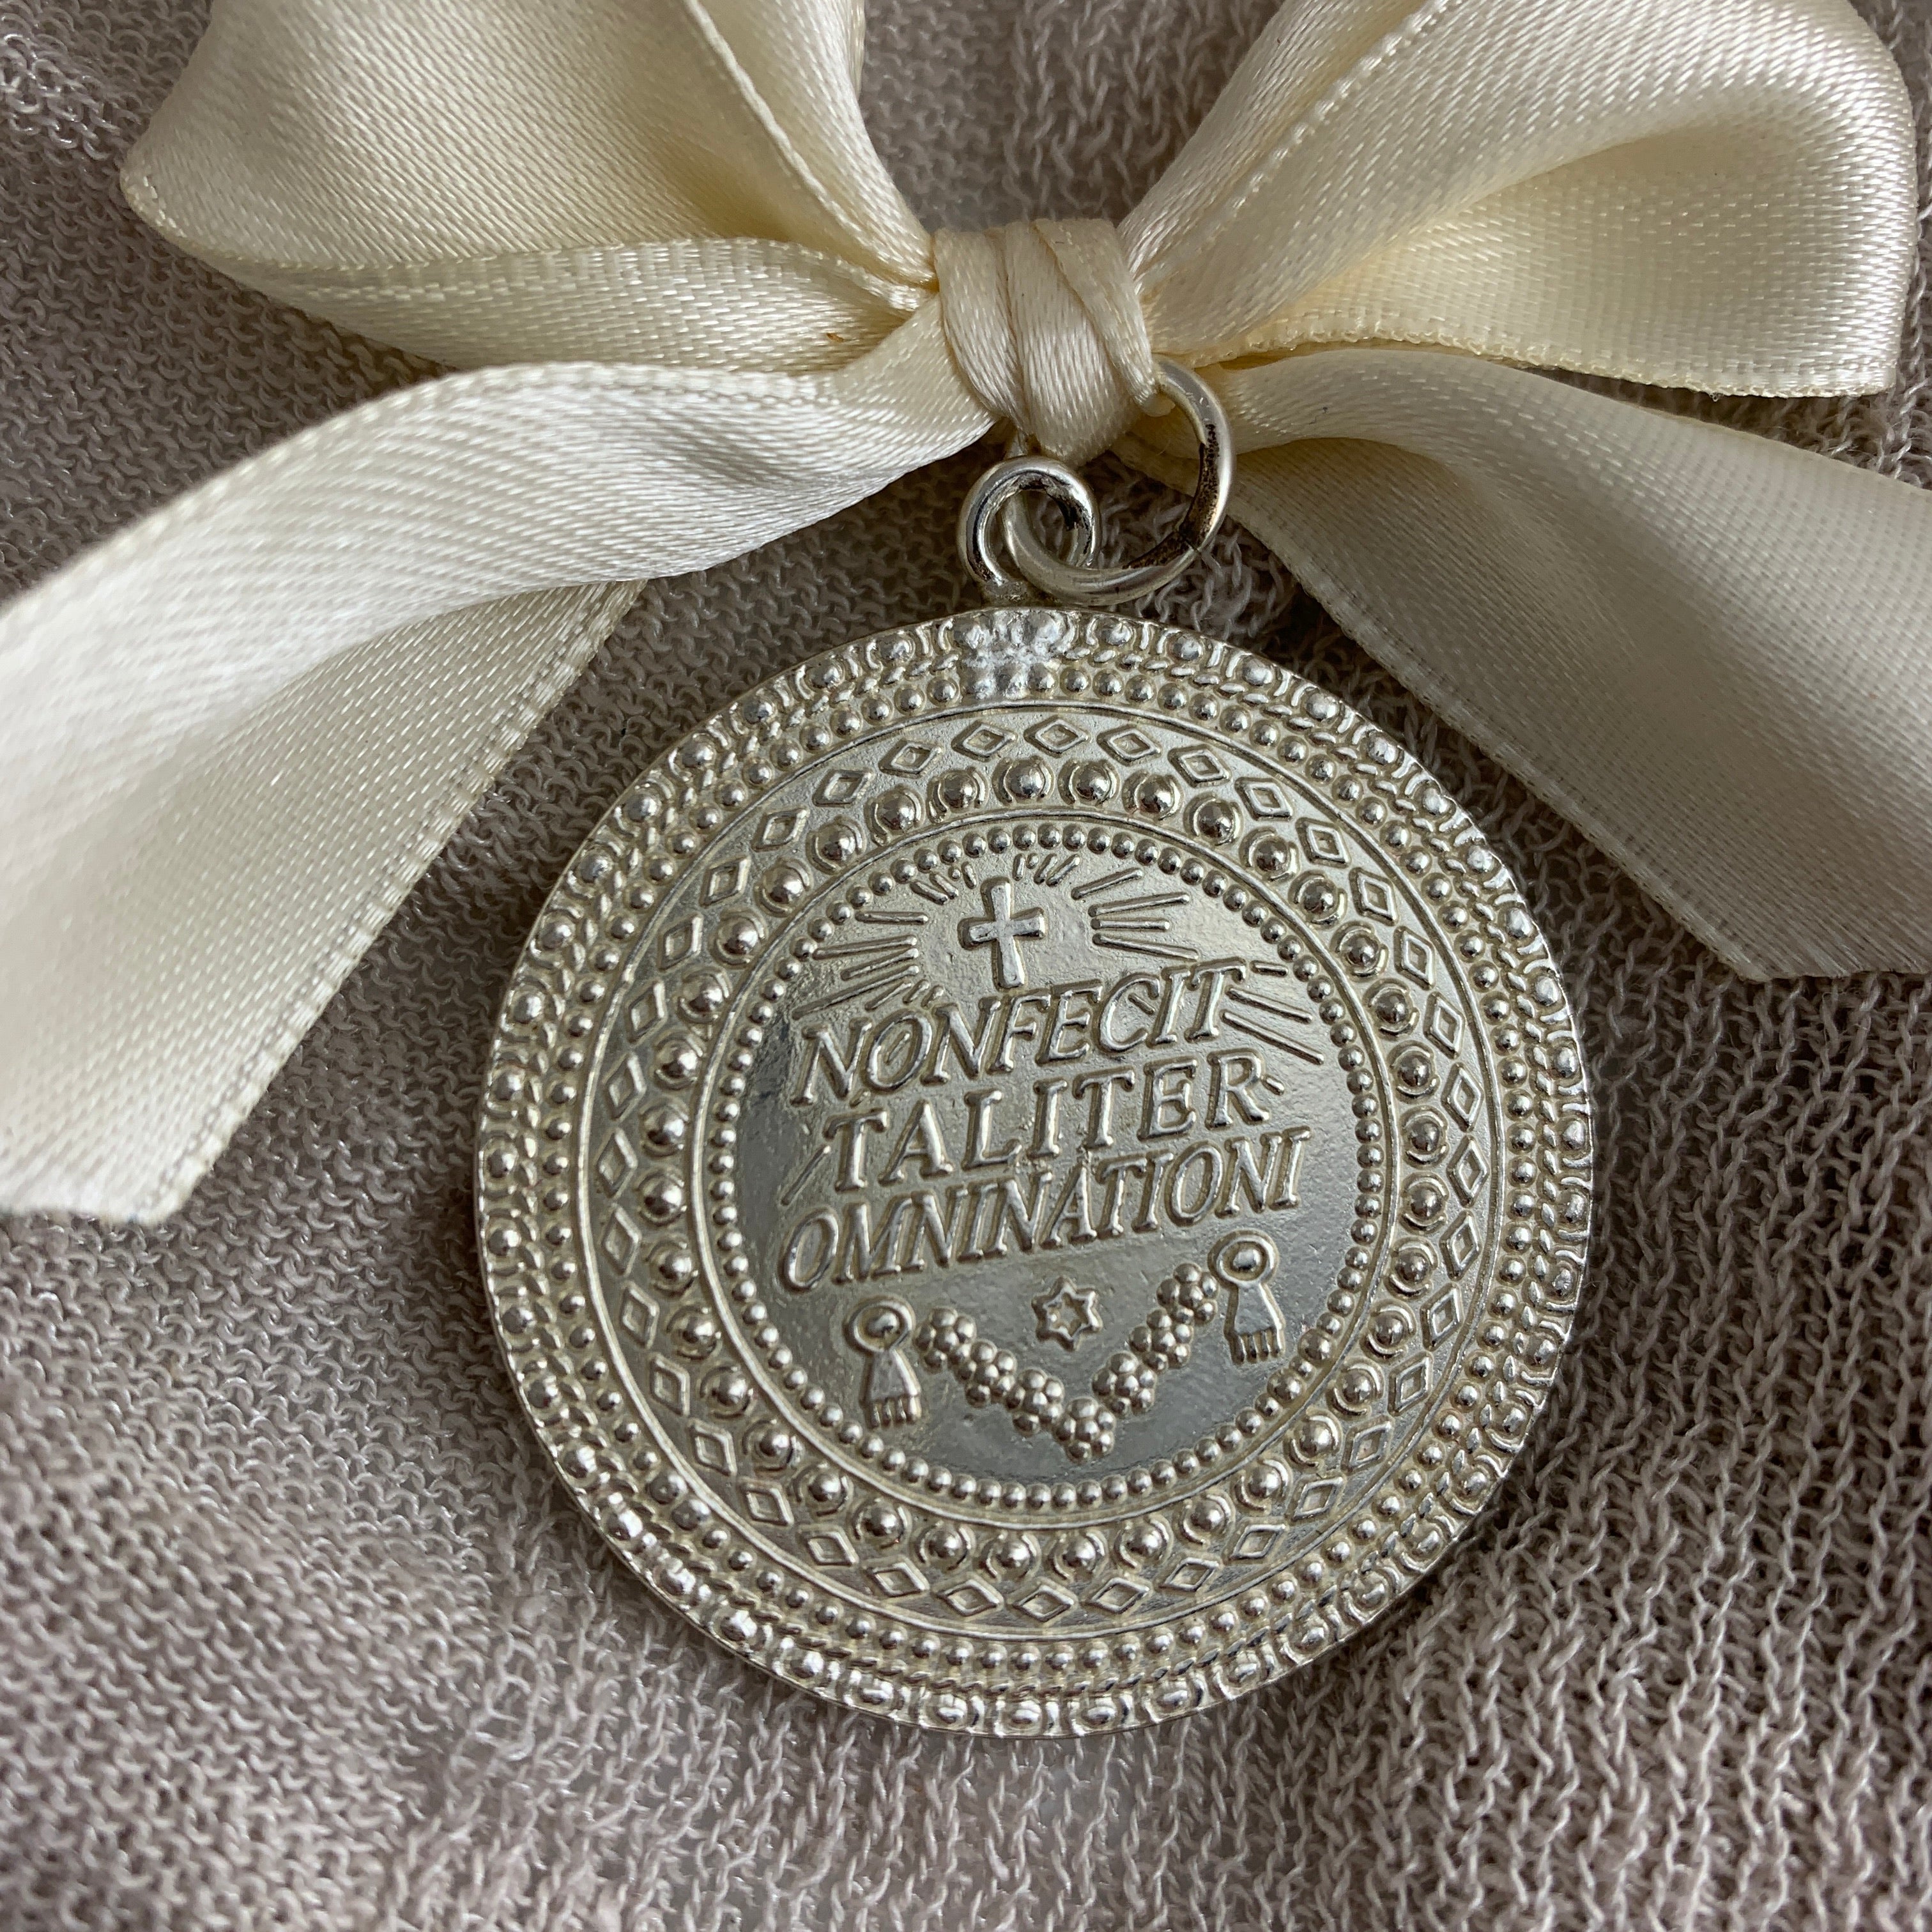 Medalla Centenario Virgen de Guadalupe - Baño de Plata